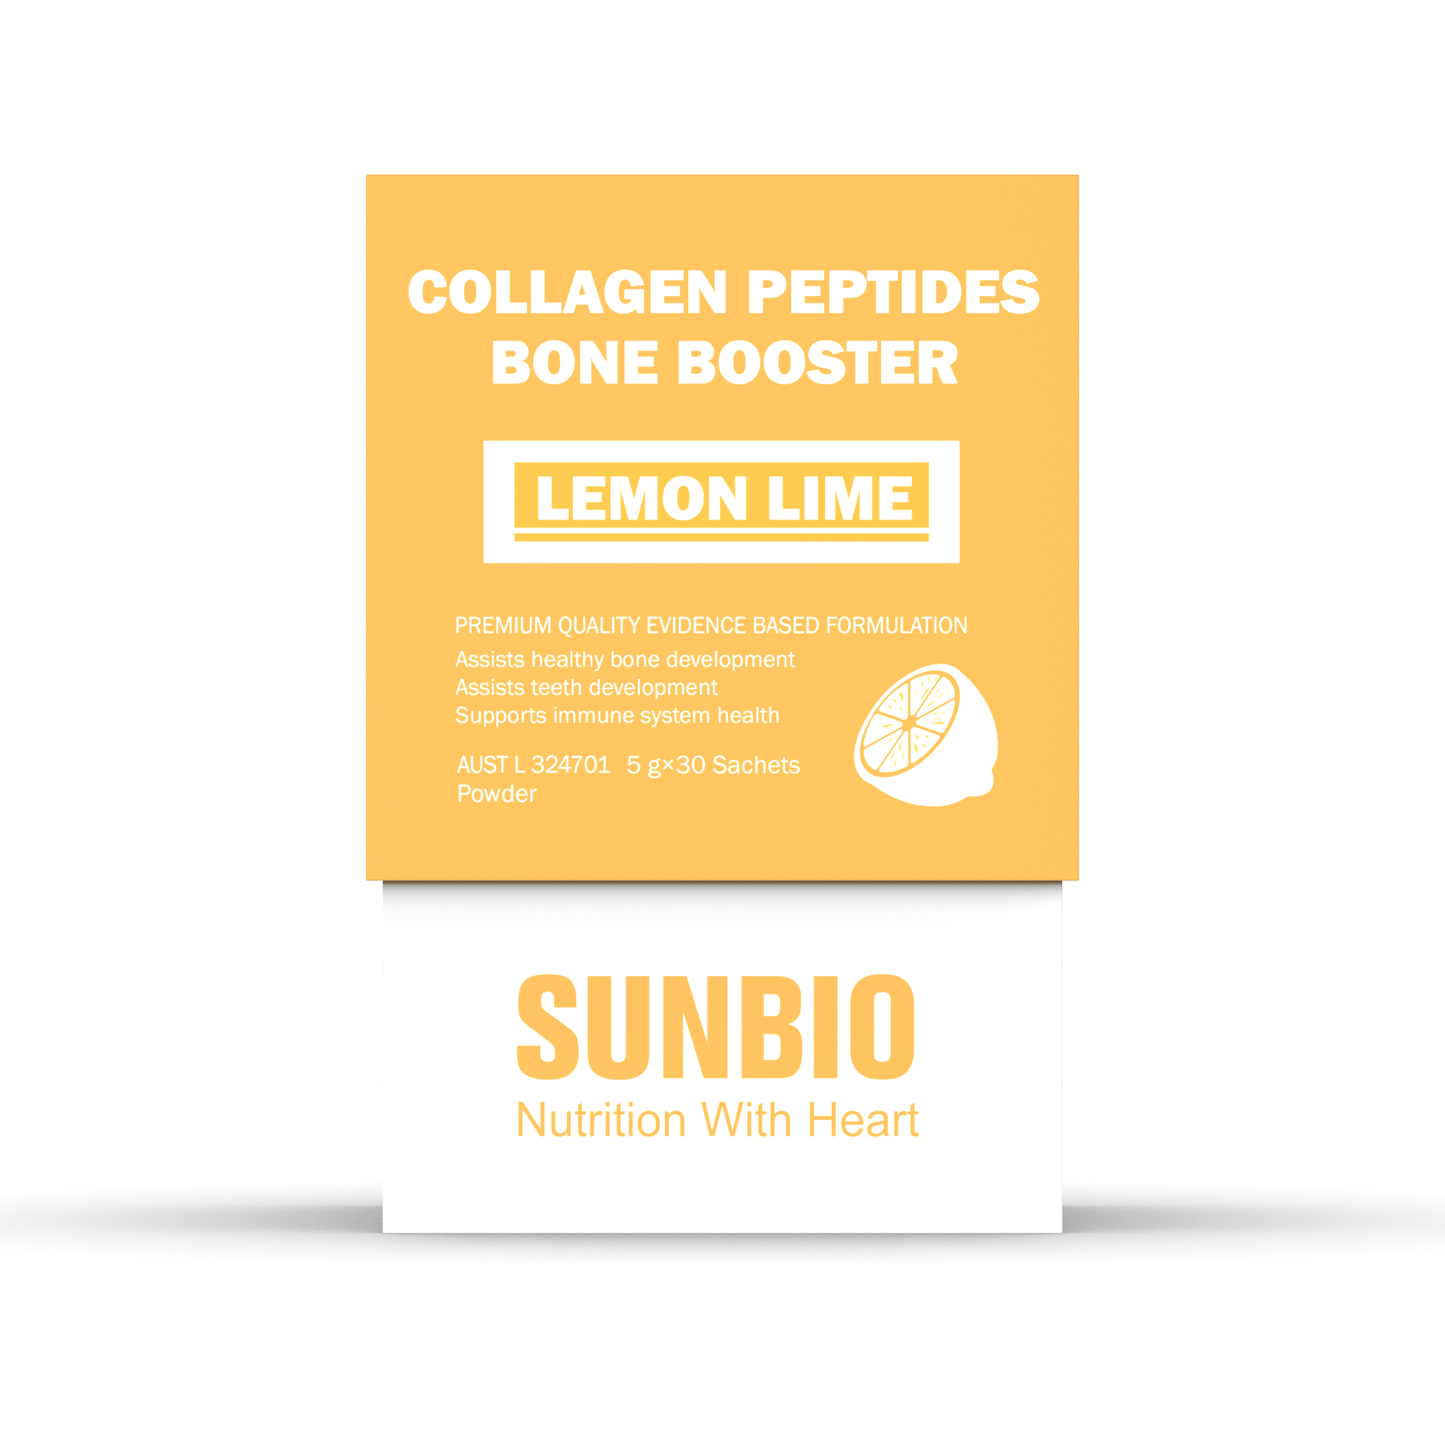 Collagen Peptides Bone Booster Lemon Lime Flavor Carton Front